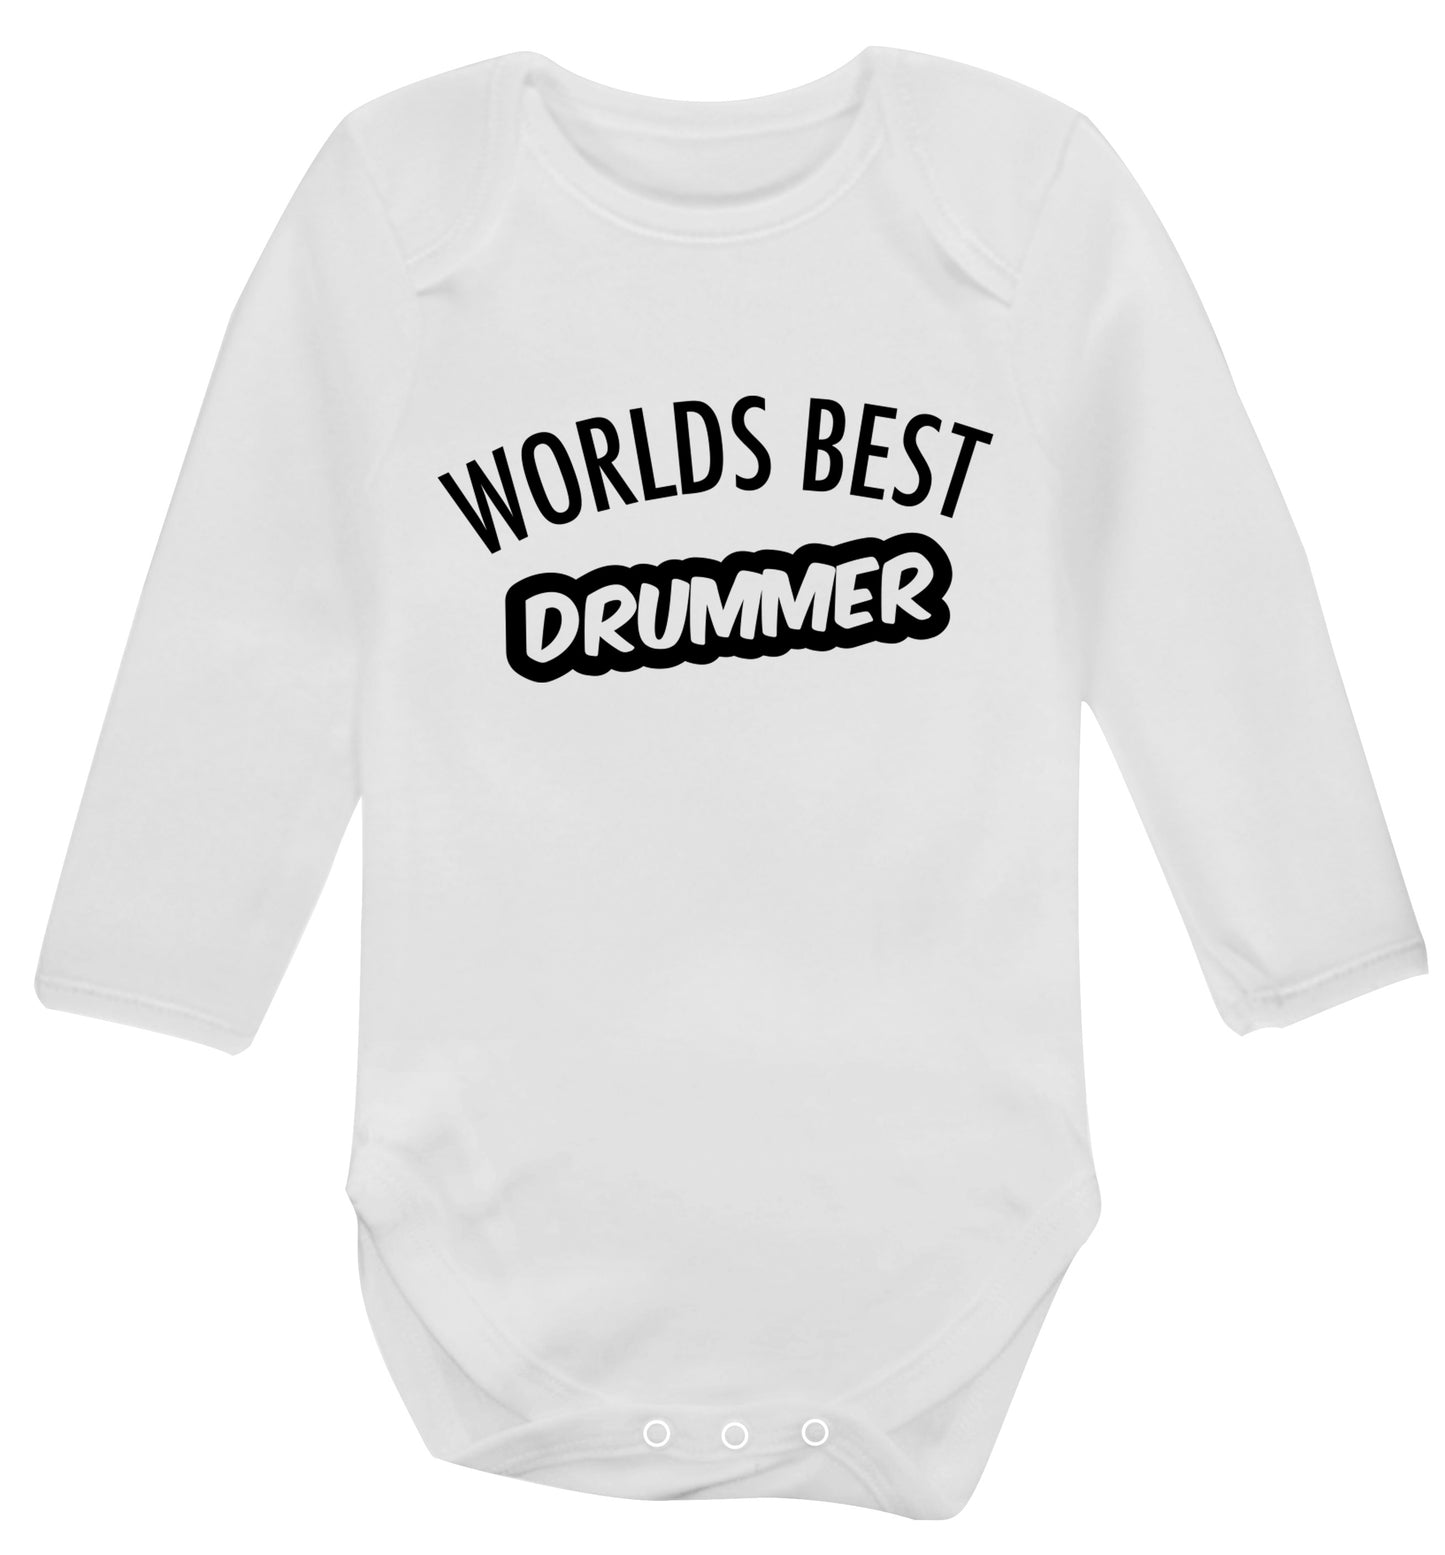 Worlds best drummer Baby Vest long sleeved white 6-12 months